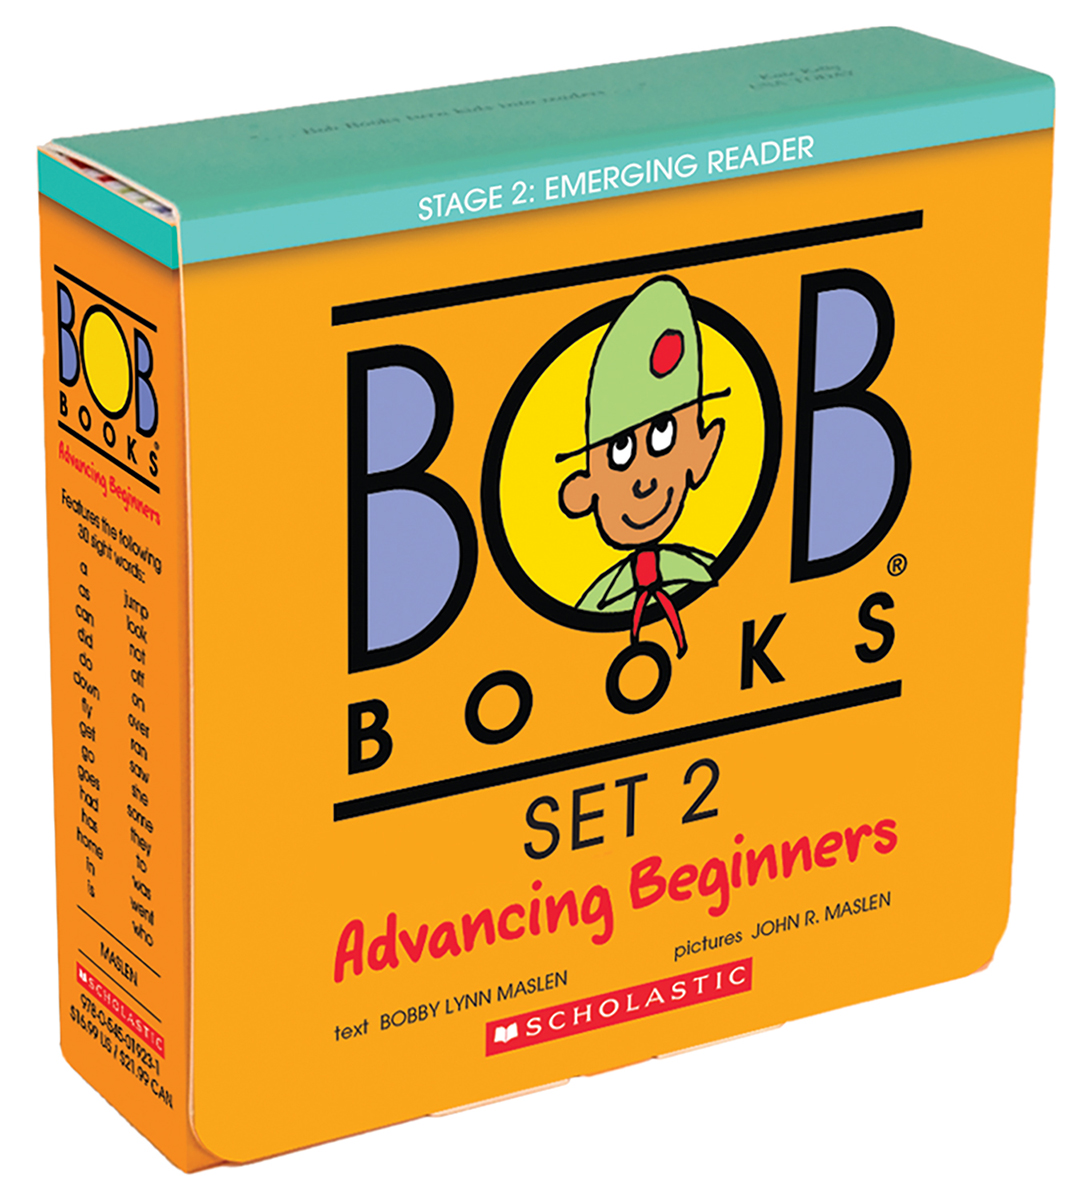  Bob Books® Set 2: Advancing Beginners Boxed Set 